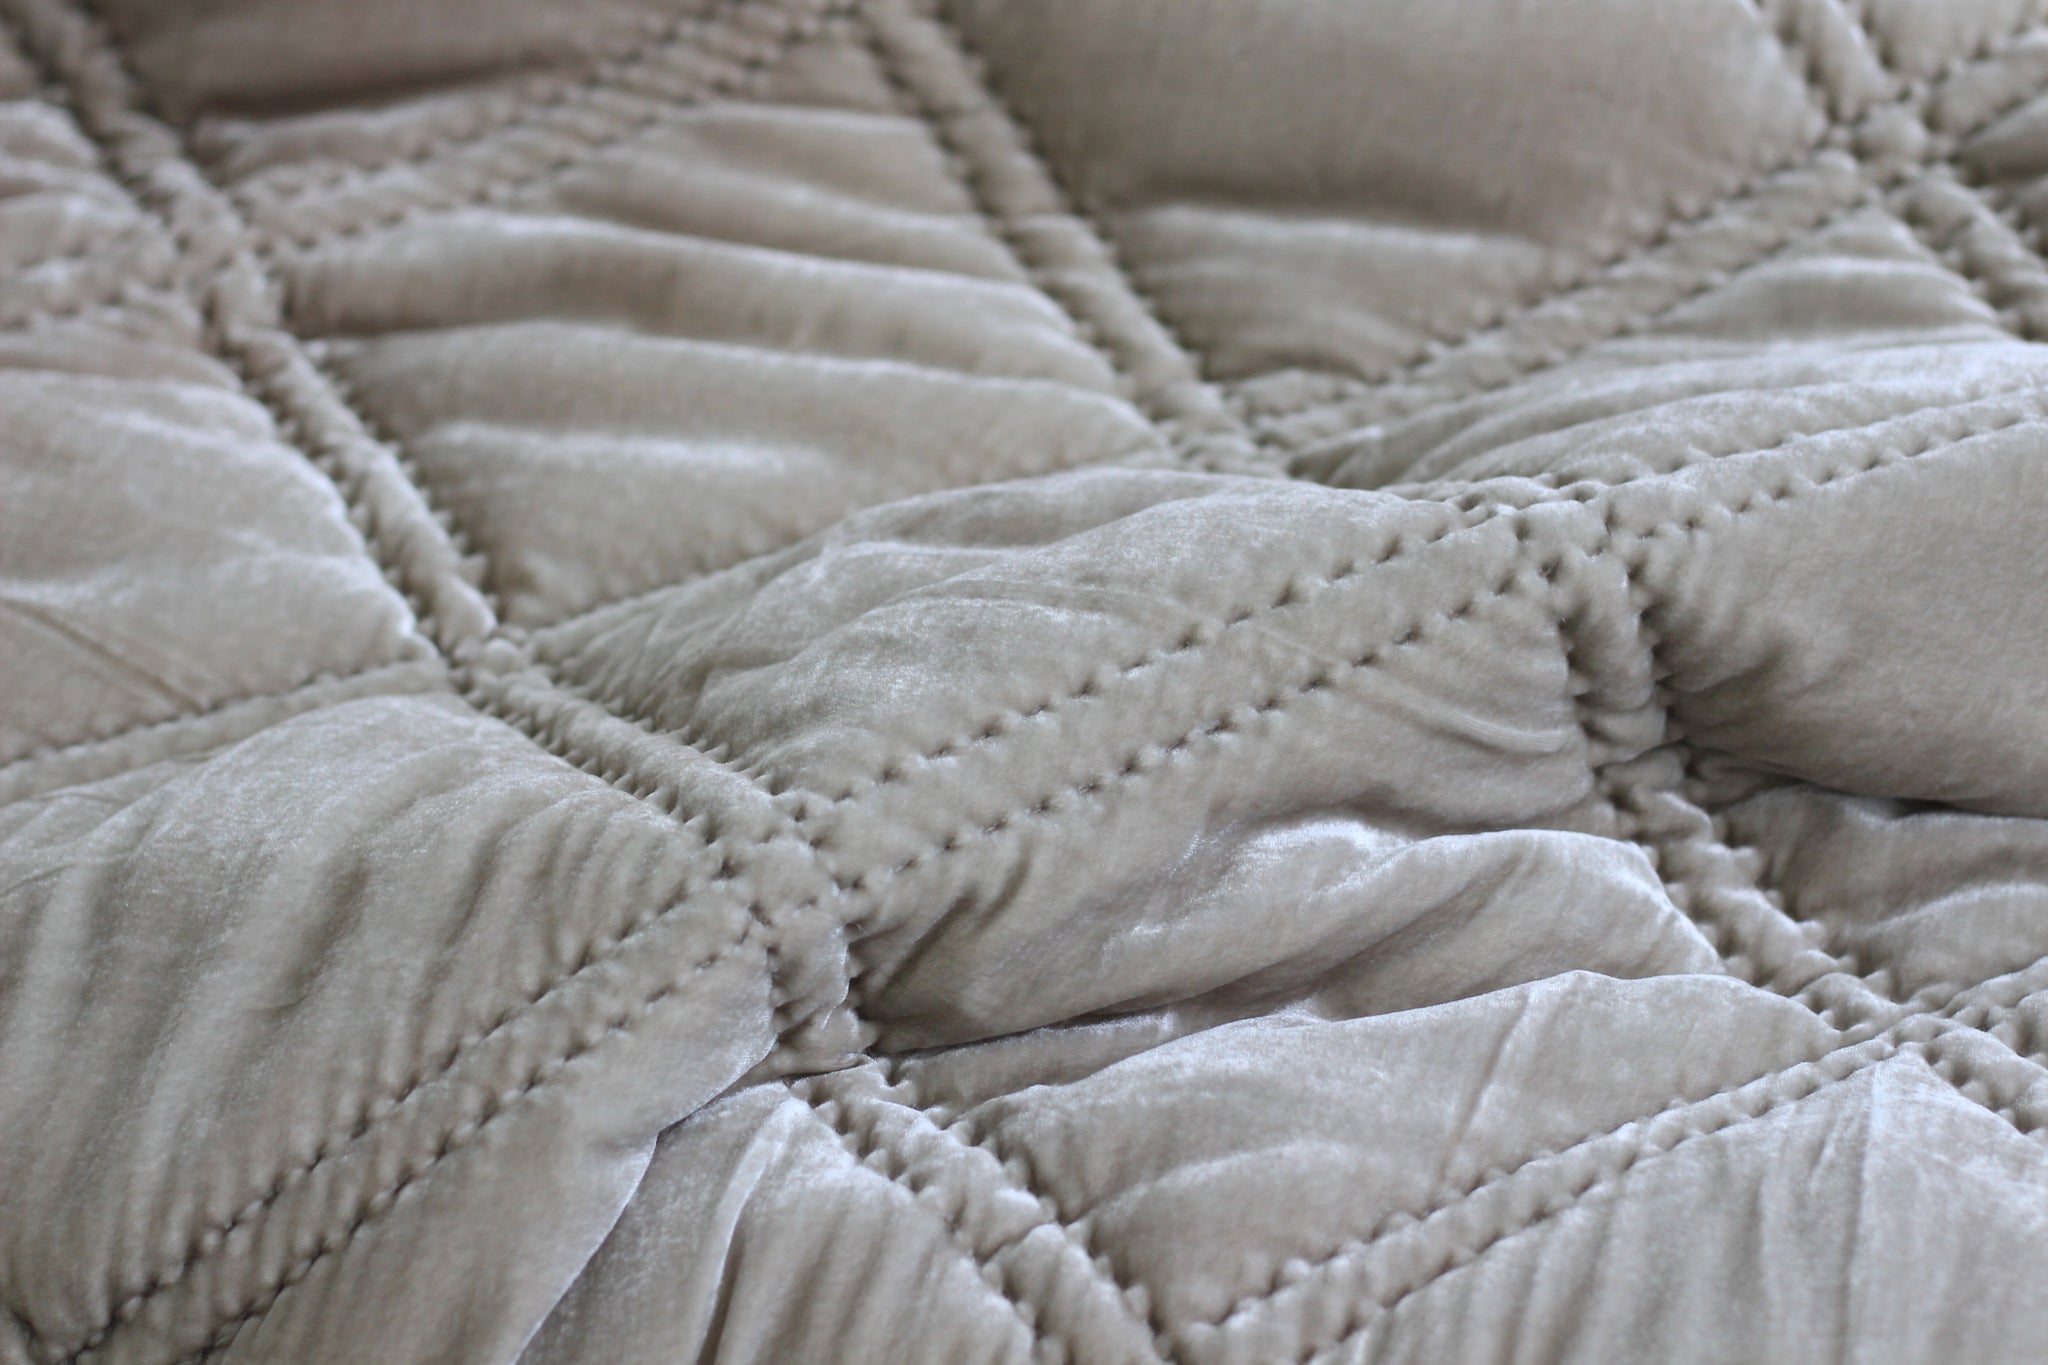 diamond Chanel hand stitched quilted duvet coverlet blanket bedding luxury silk velvet Vietnam artisan made